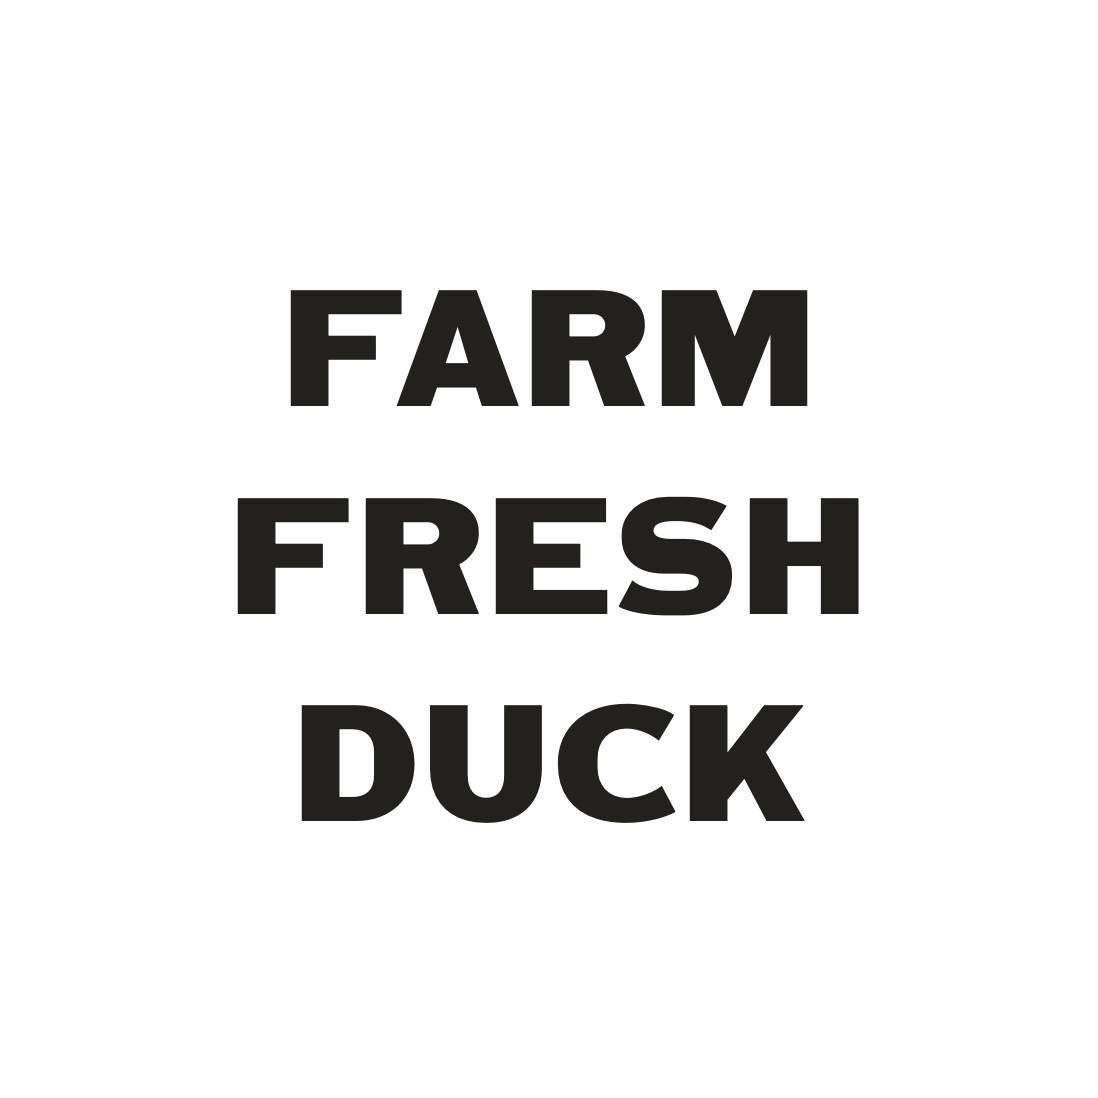 Farm Fresh Duck.png